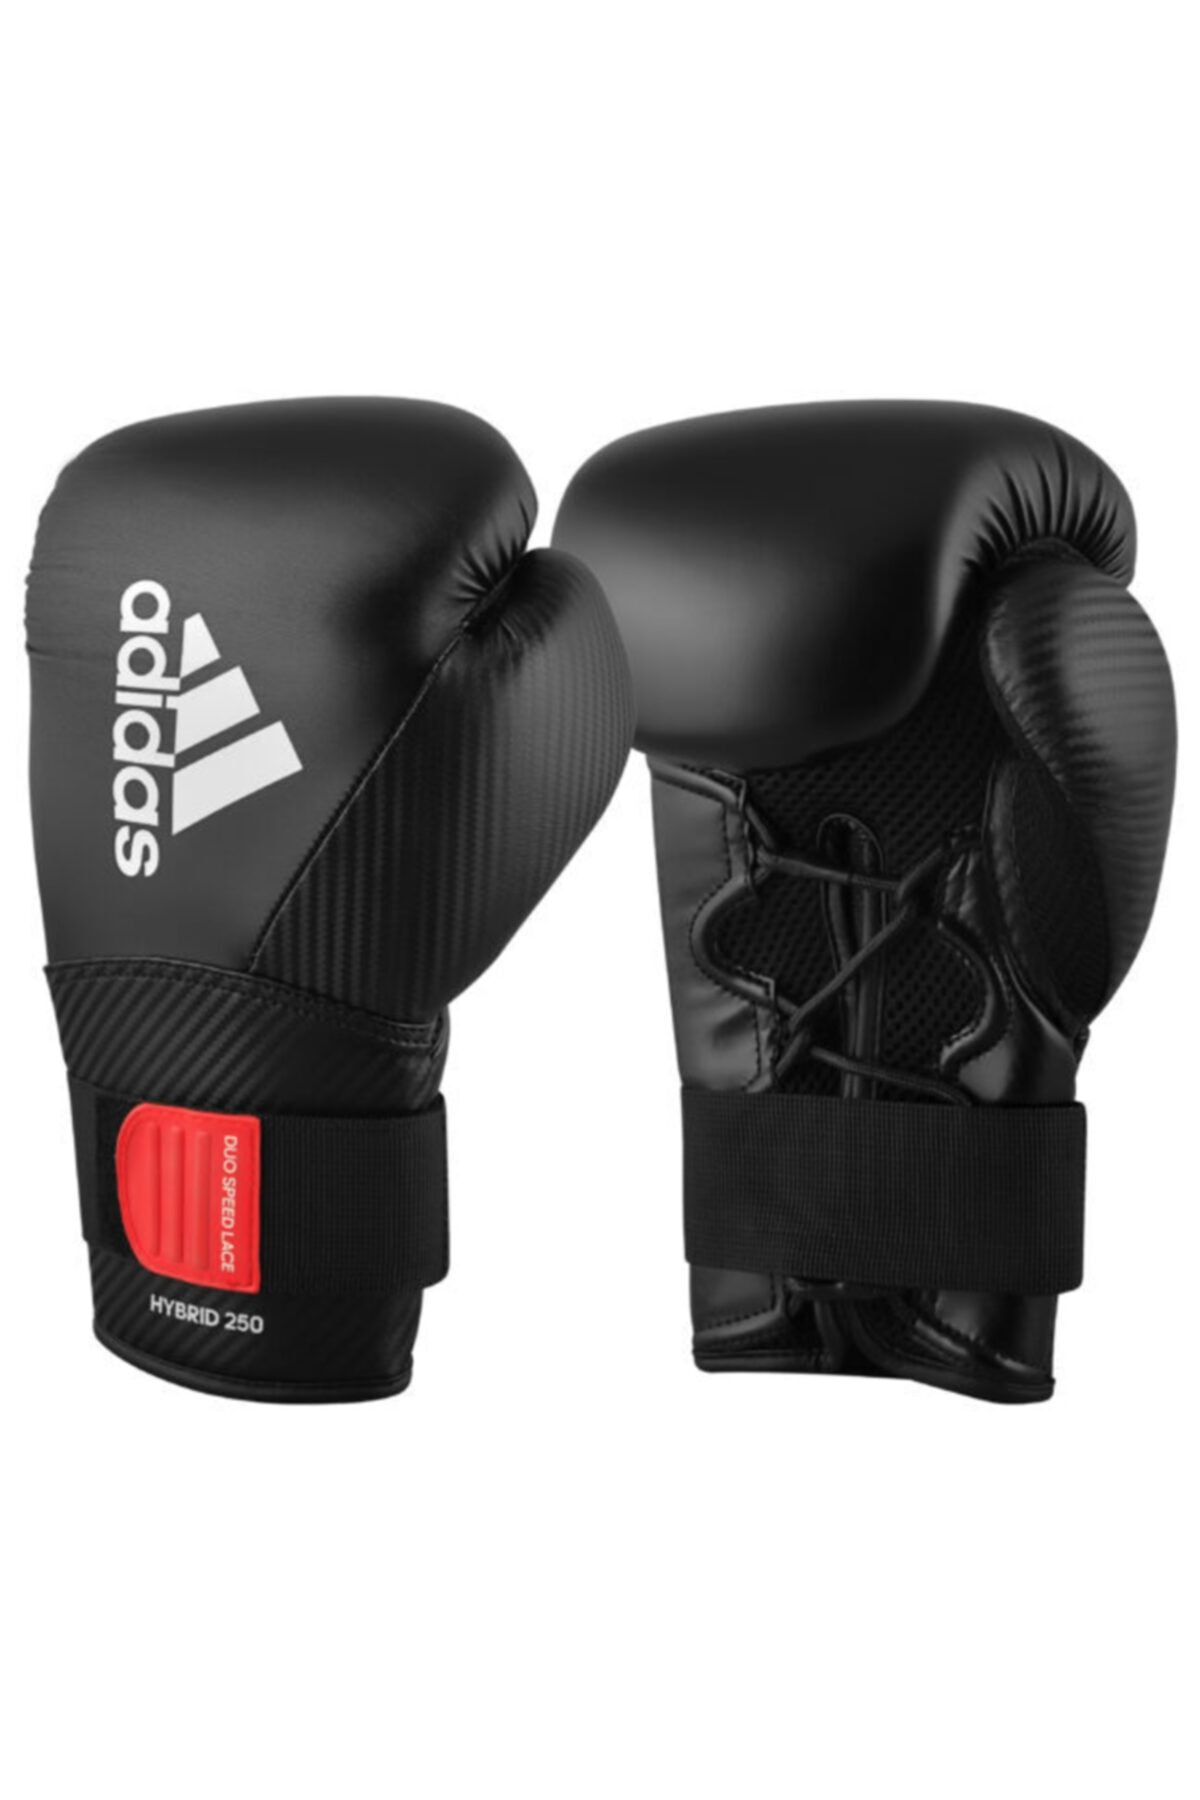 adidas Hybrid250 Boks Eldiveni Boxing Gloves Adıh250tg